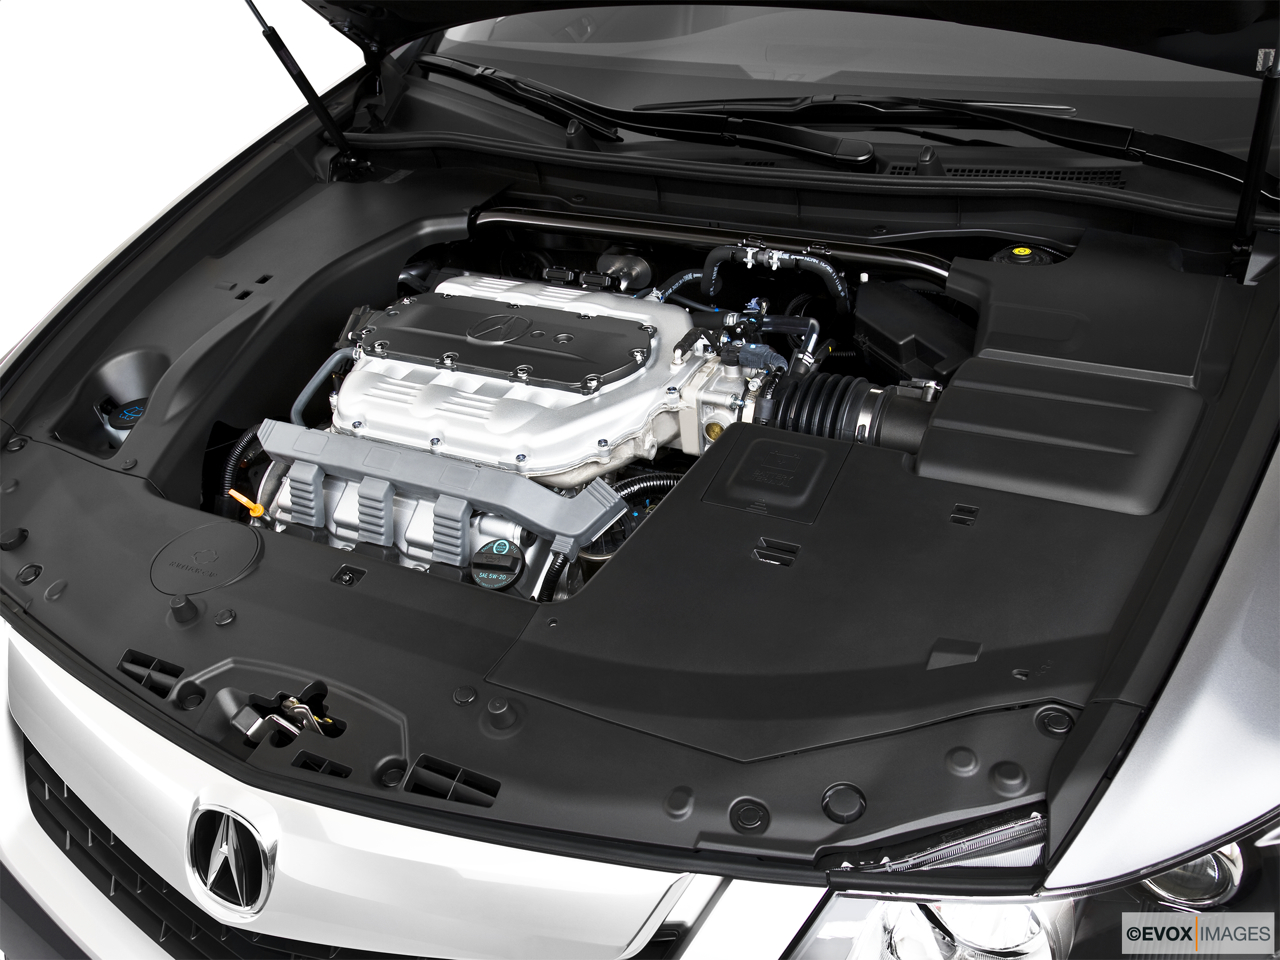 2010 Acura TSX V6 Engine. 